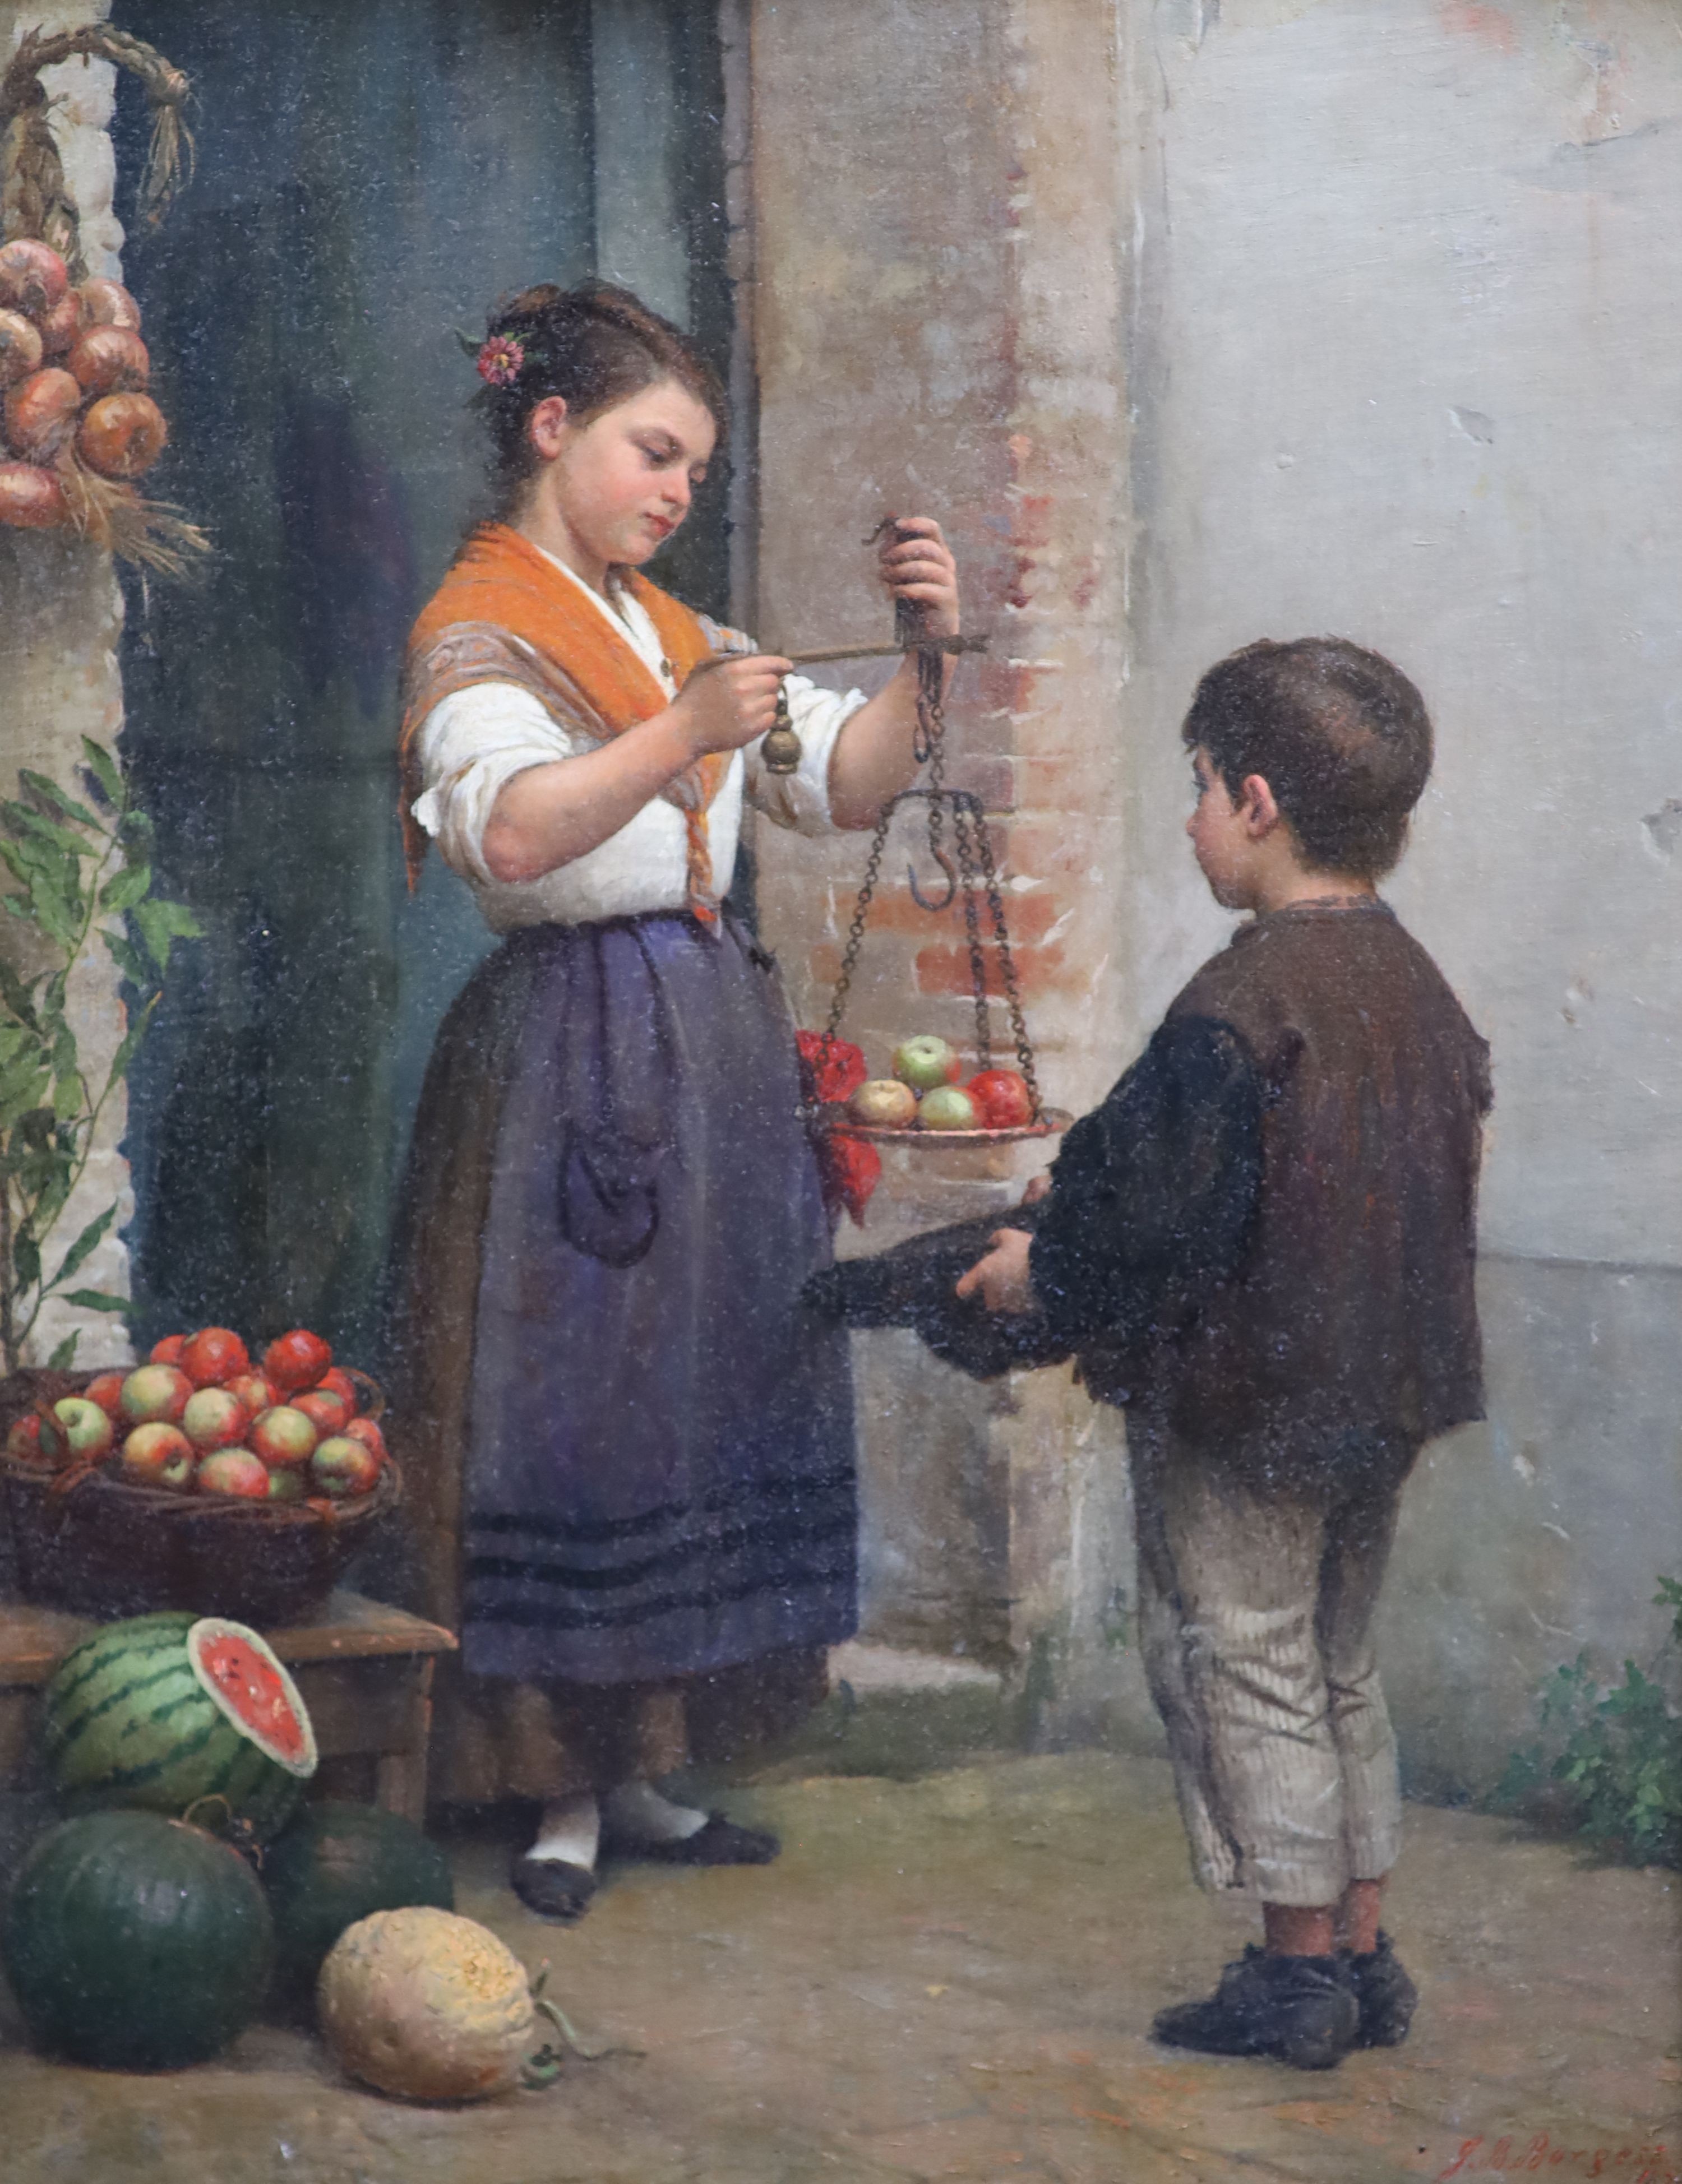 John Bagnold Burgess (1830-1897), The Fruit Seller, Oil on canvas, 40 x 30cm.